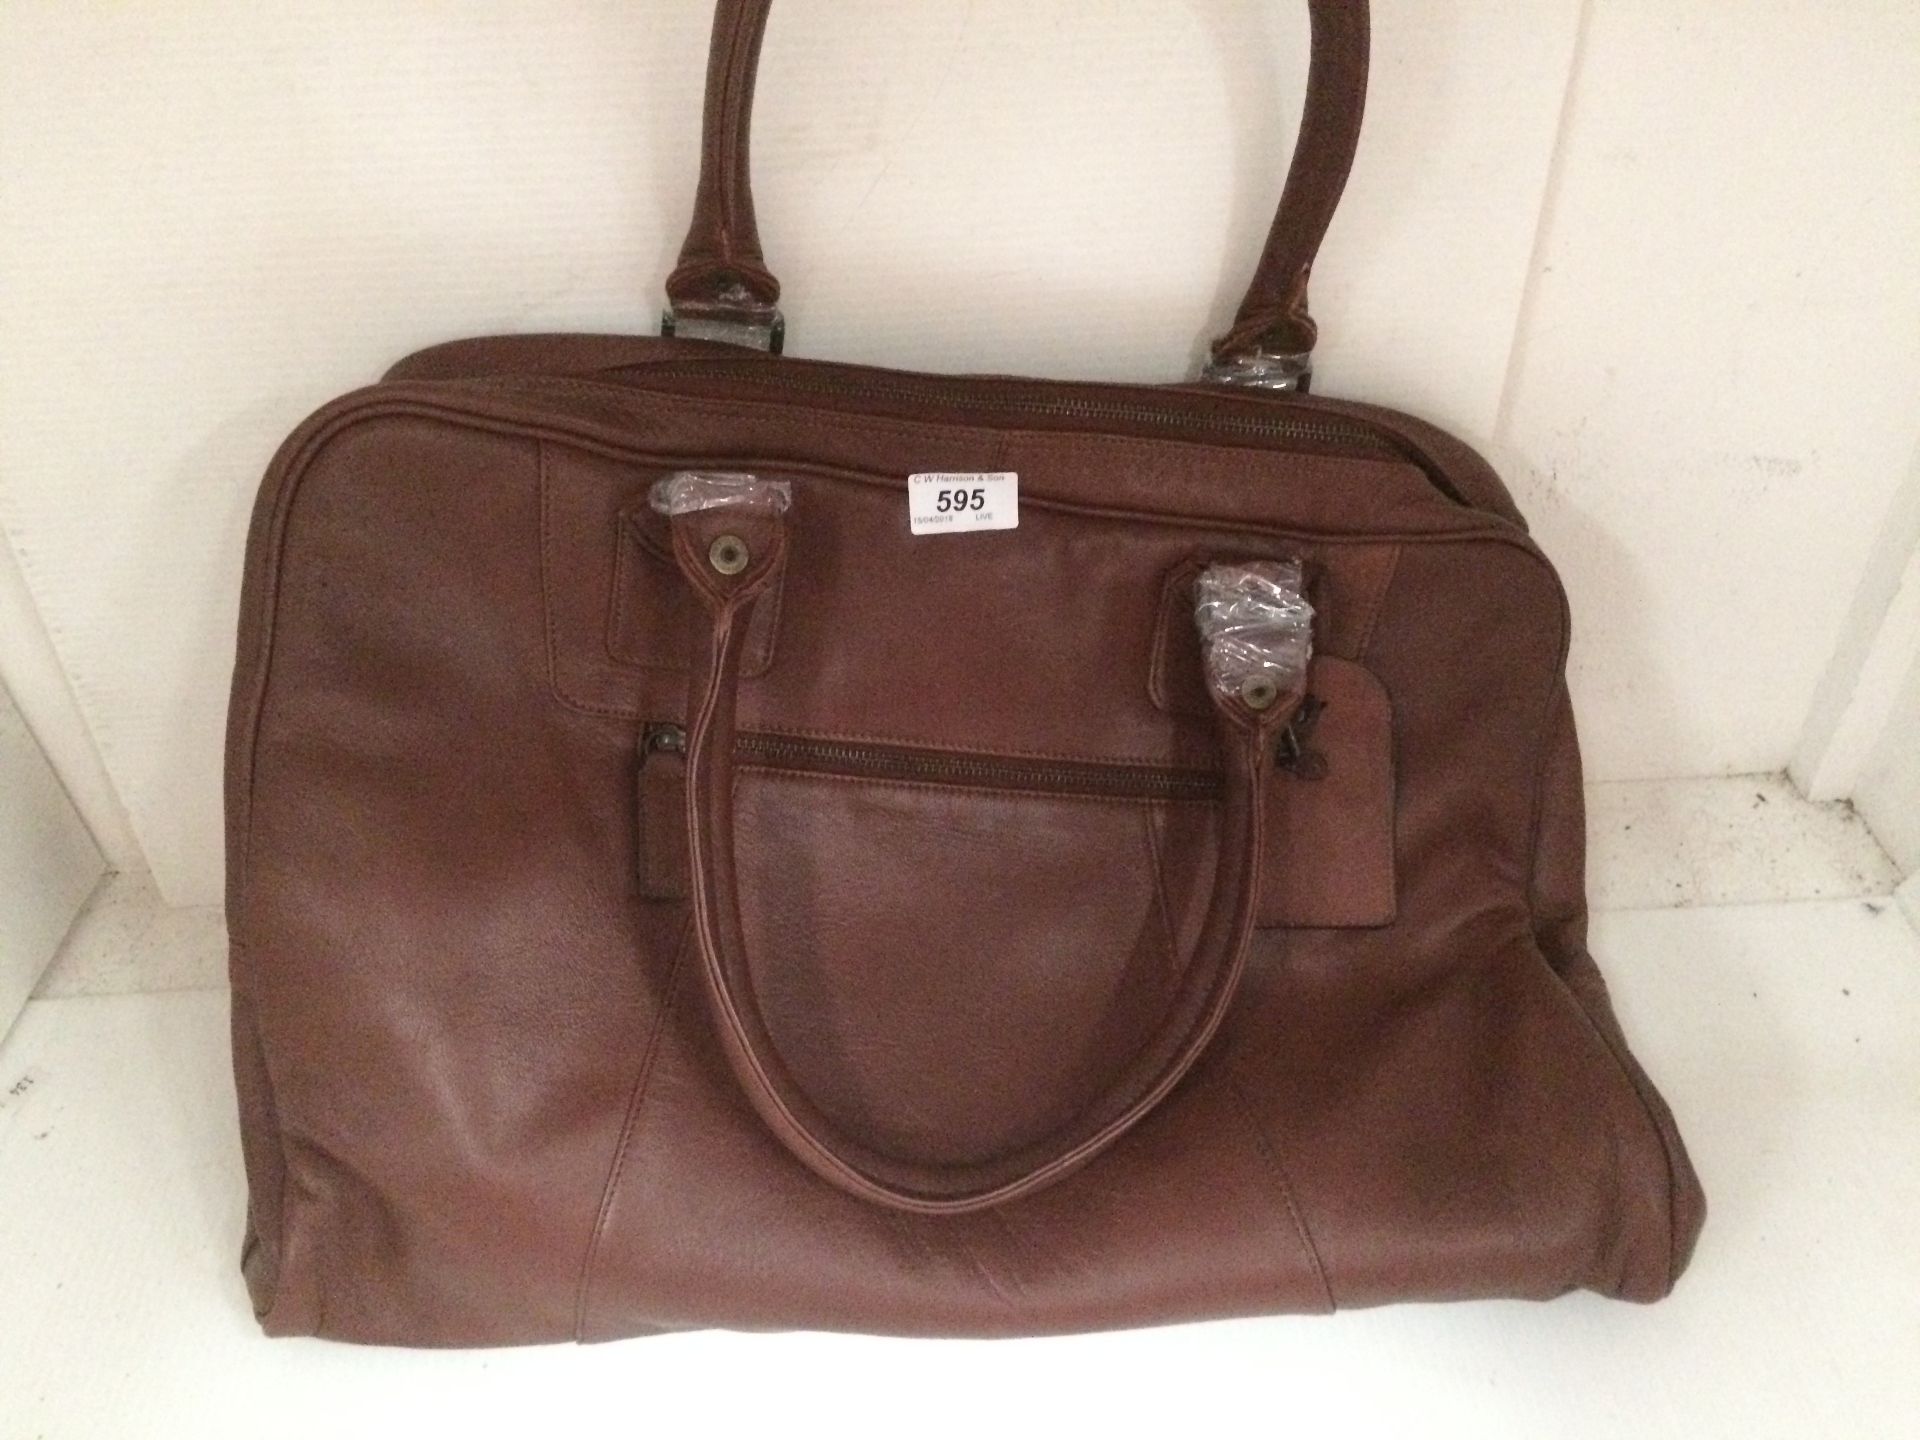 A dark brown leather handbag